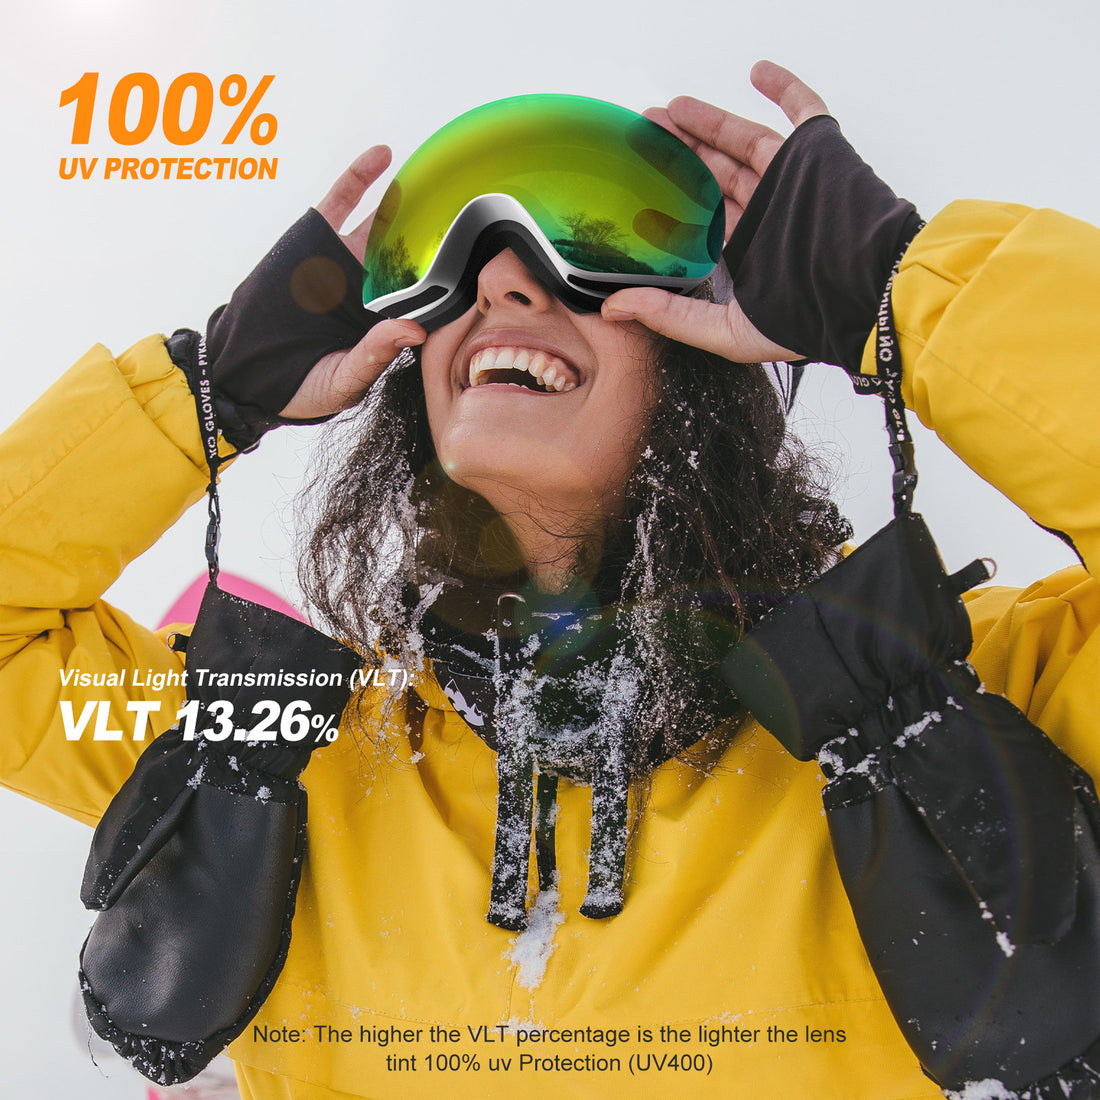 Raytice Ski Goggles, Snowboard Goggles,Spherical OTG Ski Glasses with UV400 protection, Anti Fog, Anti glare, REVO coated Ski Glasses Suitable for Snowboarding, Snowmobiles Sking Goggles for Men Women